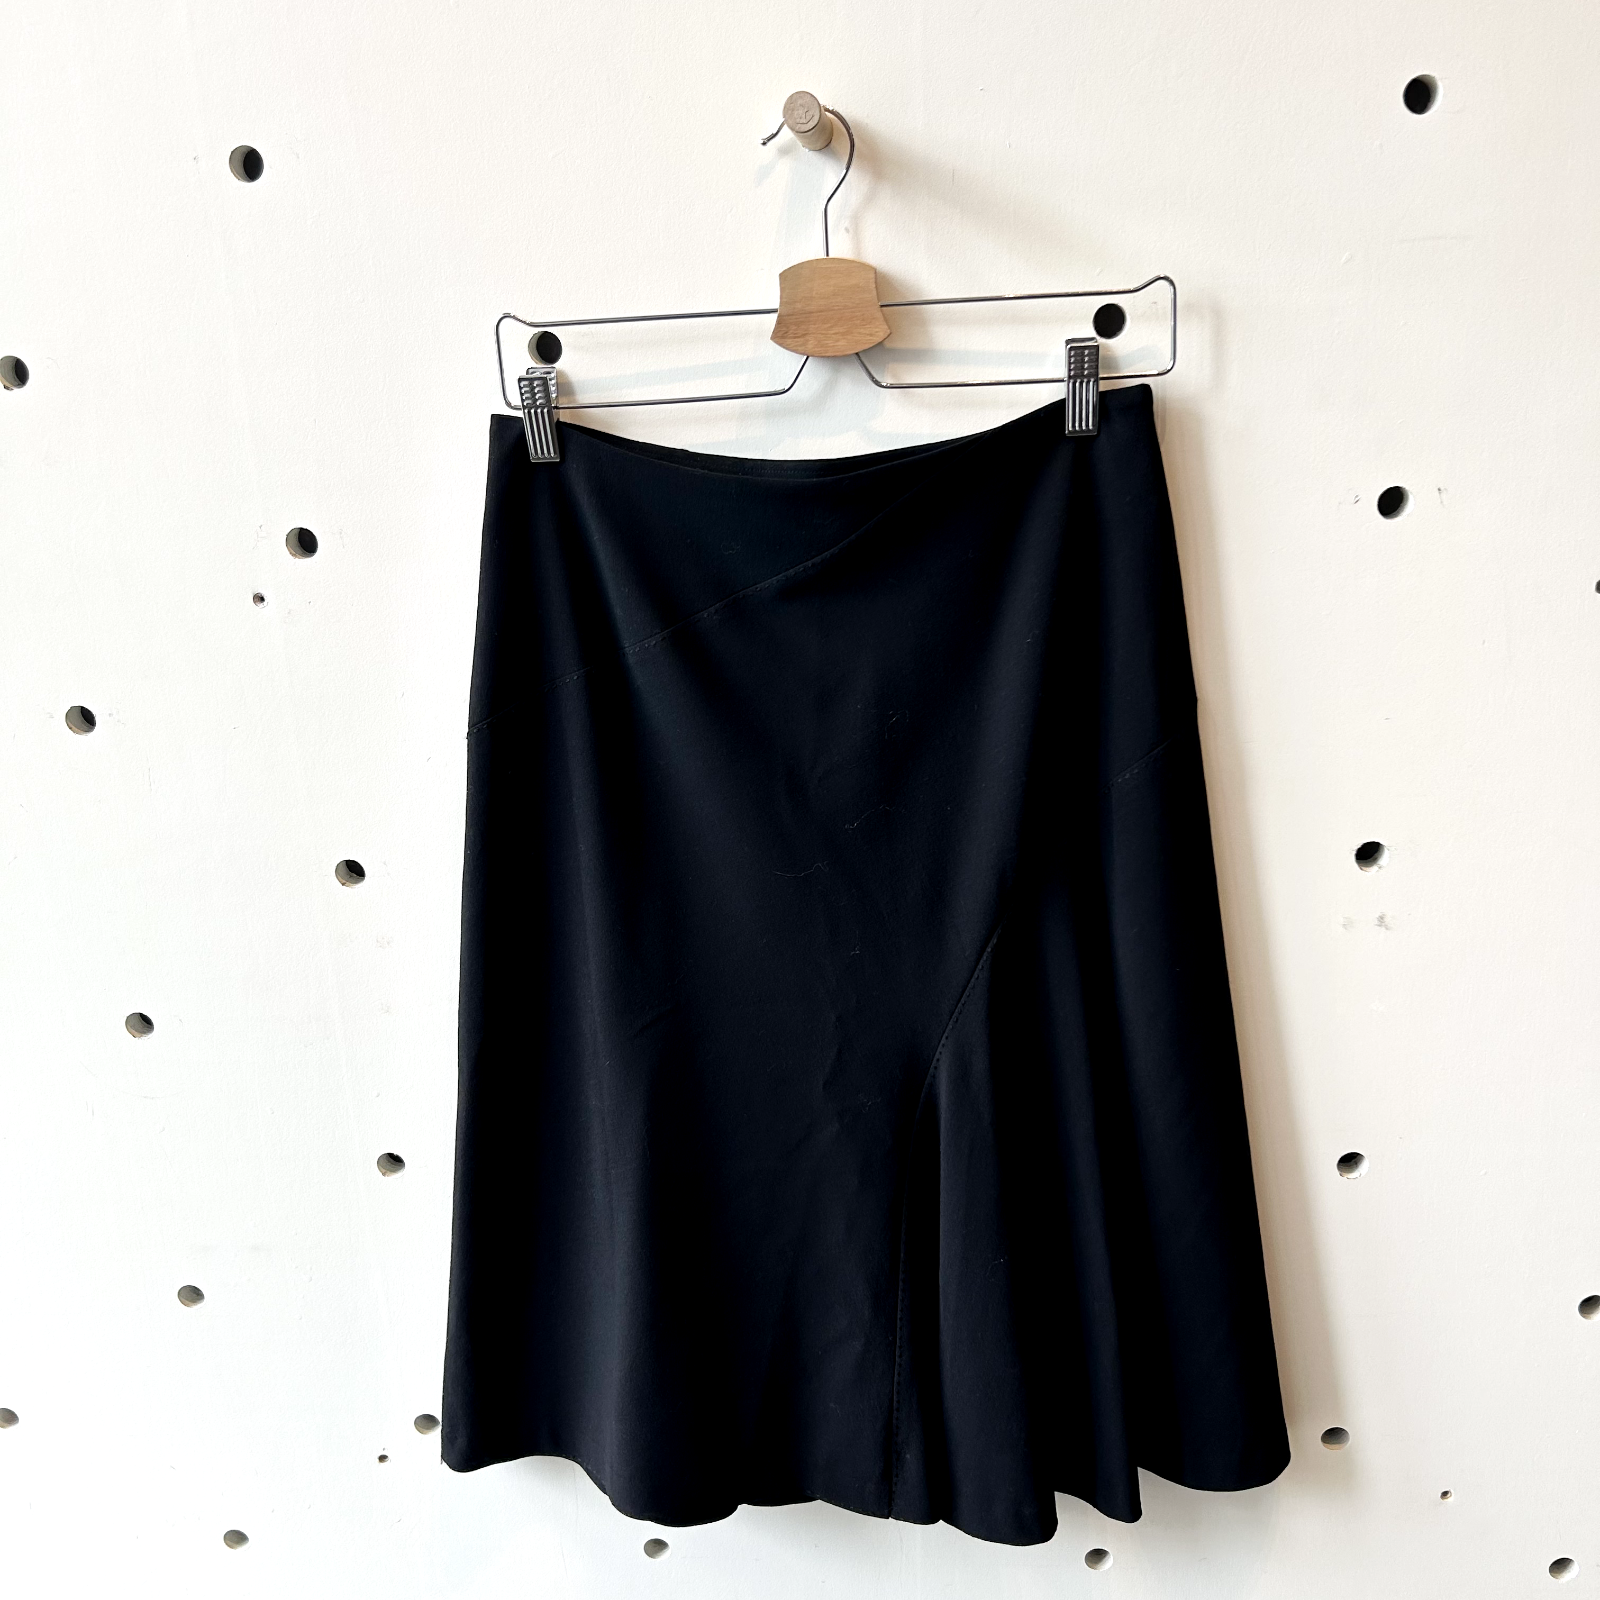 Primary image for S - Fete by Issey Miyake Japan Black Knee Length Wool Blend Skirt 0504AK